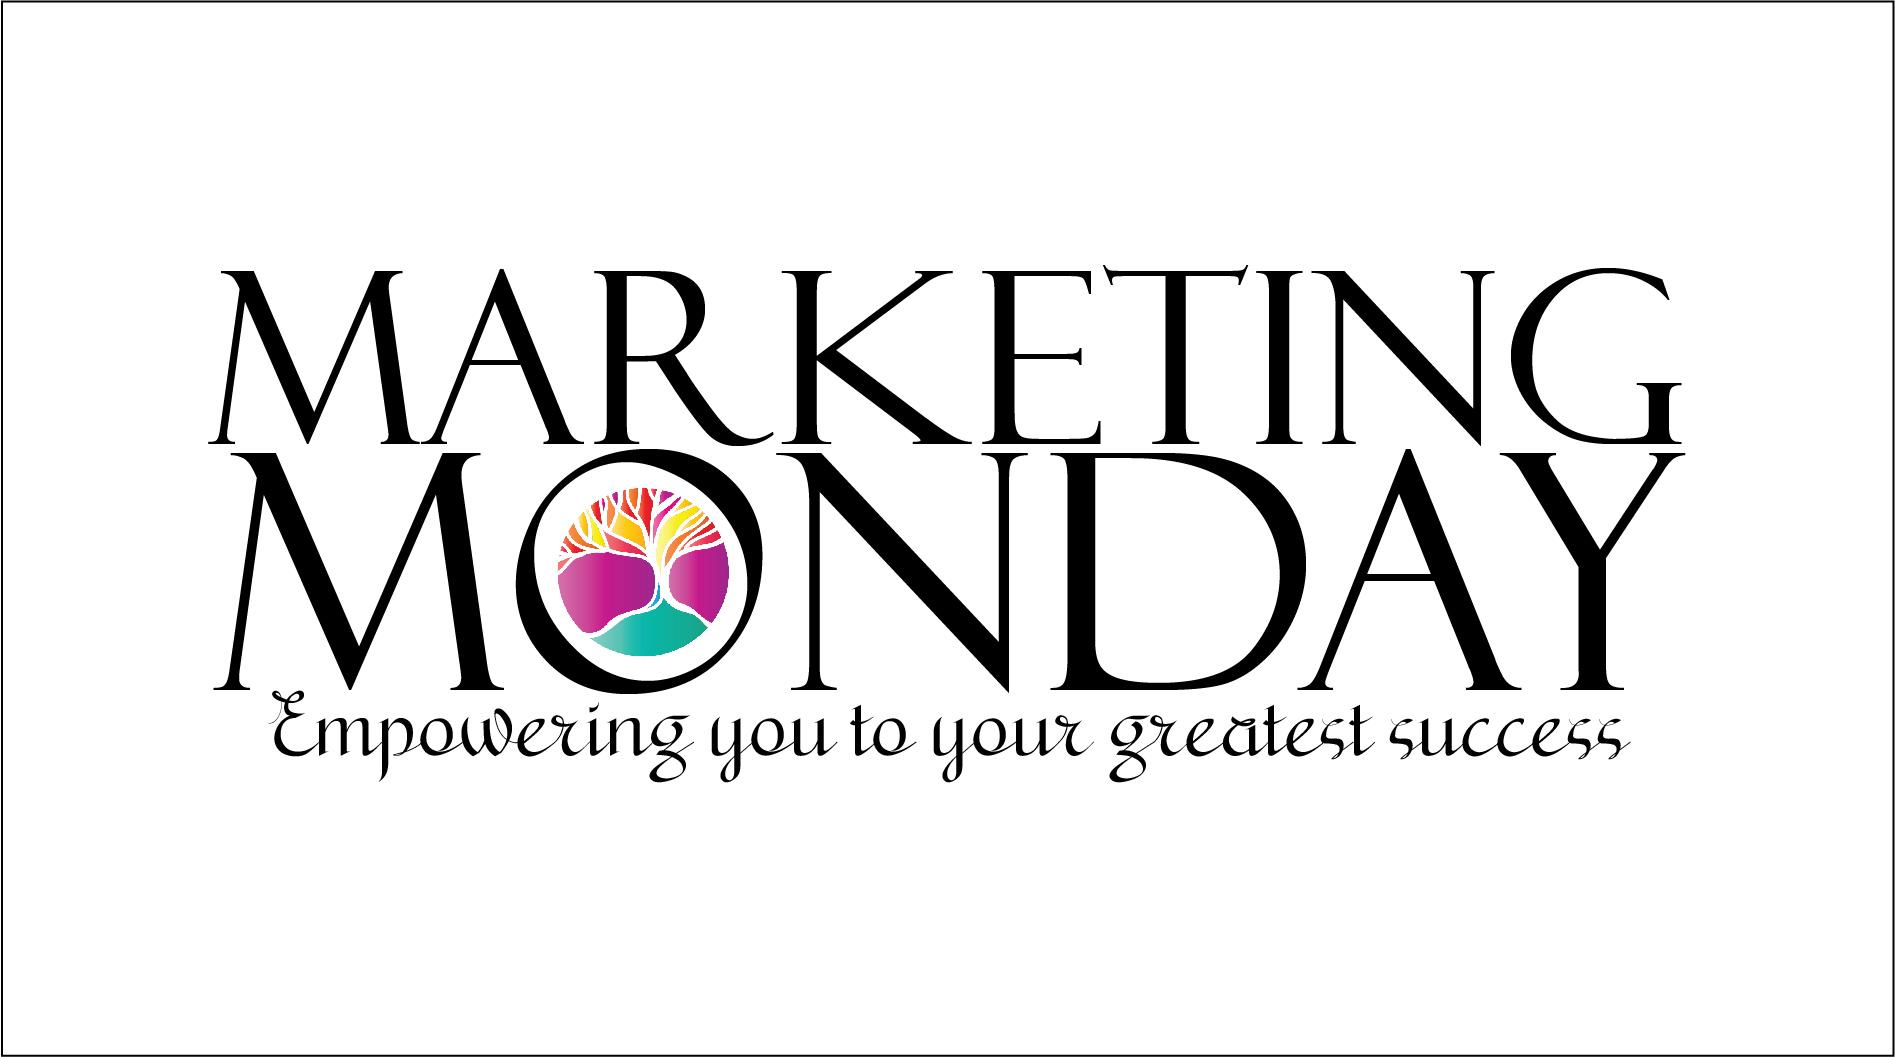 Marketing Monday